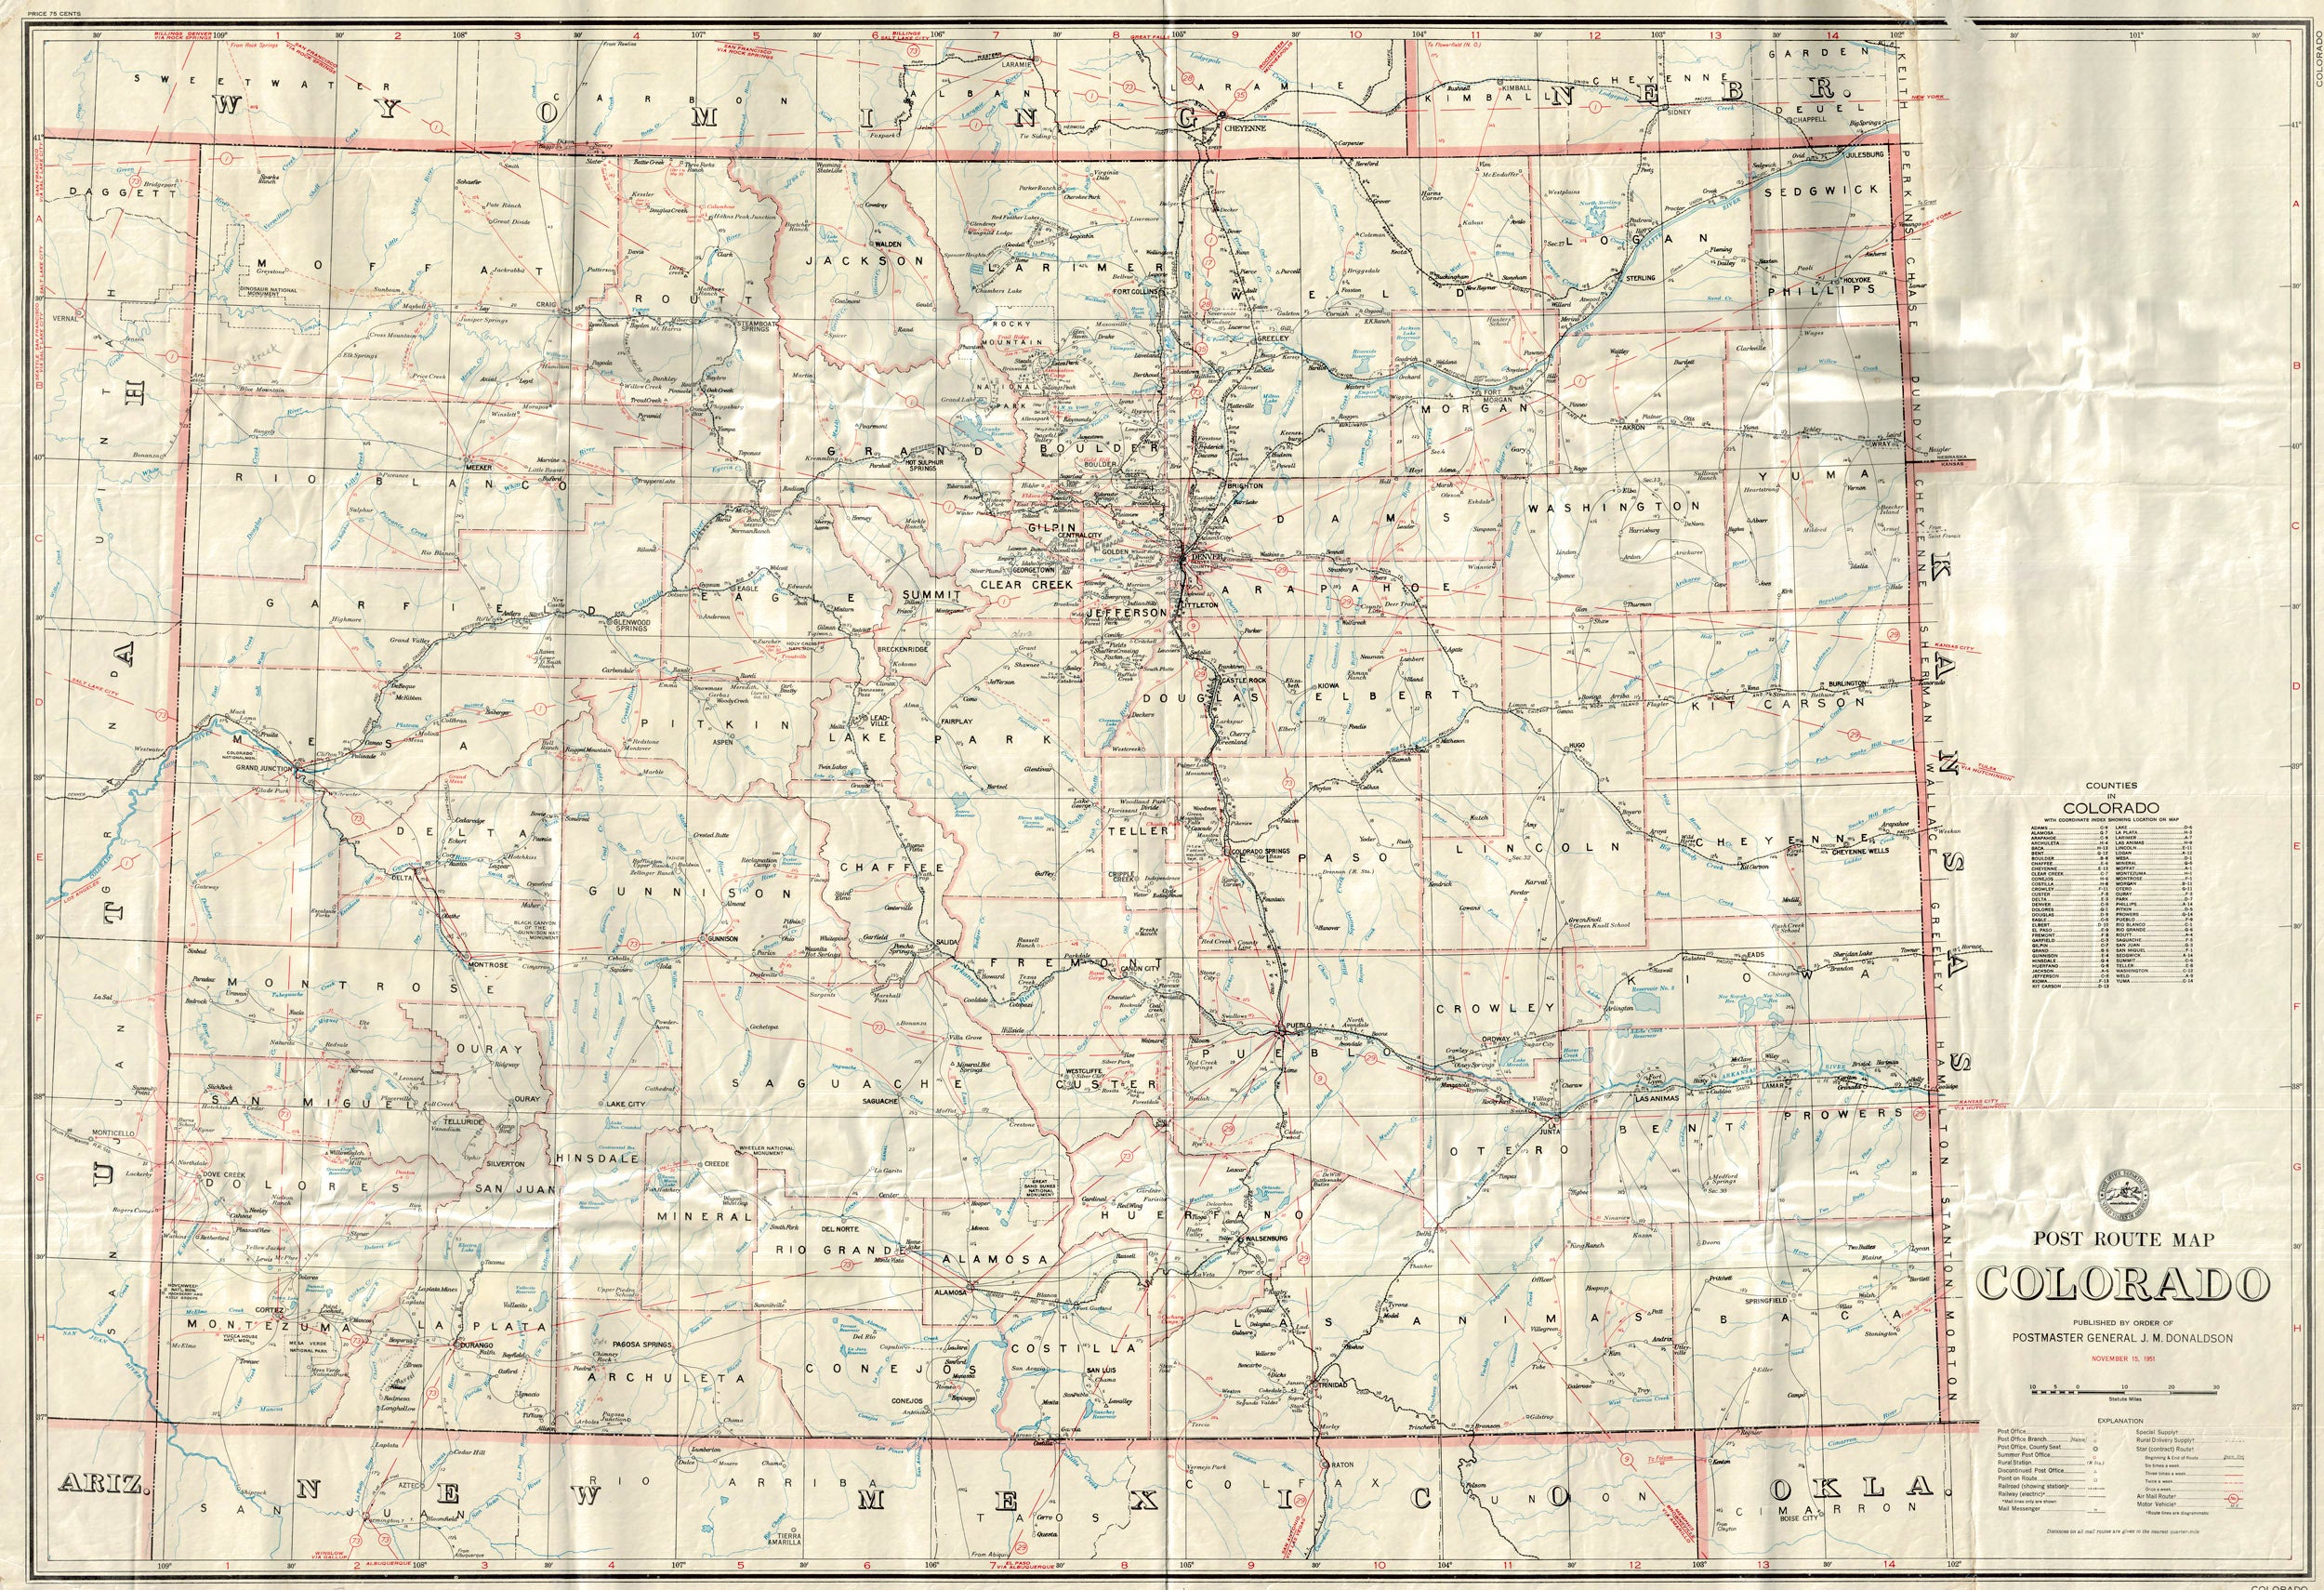 (CO. - Postal) Post Route Map Colorado